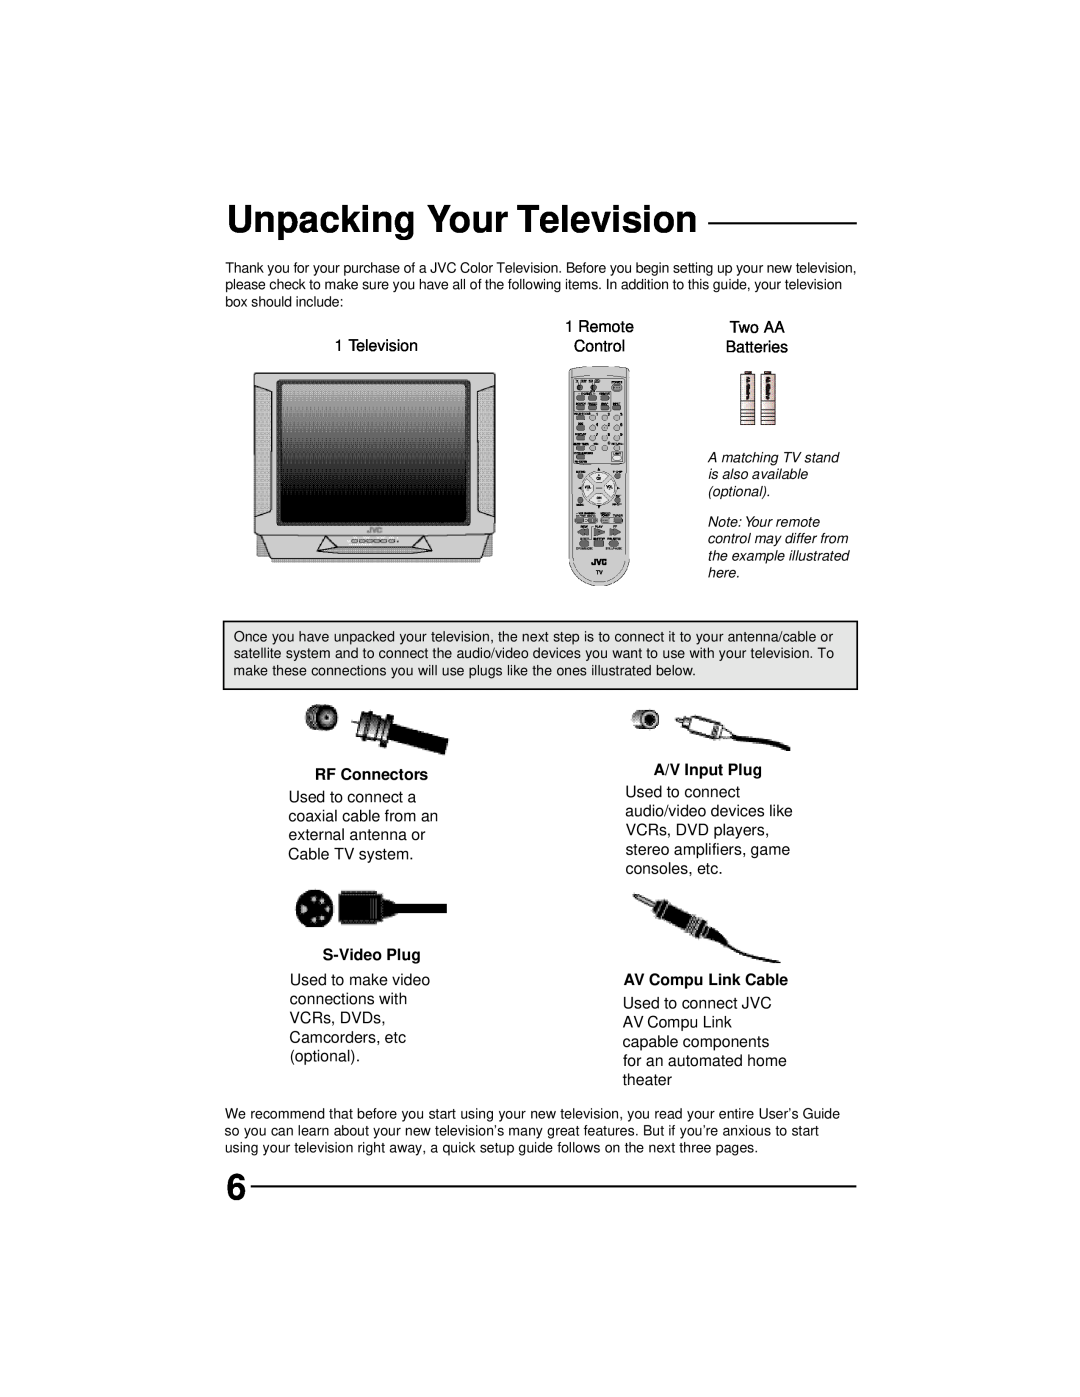 JVC AV 32D202, AV 36D202 manual Unpacking Your Television, RF Connectors, S-Video Plug, A/V Input Plug, AV Compu Link Cable 